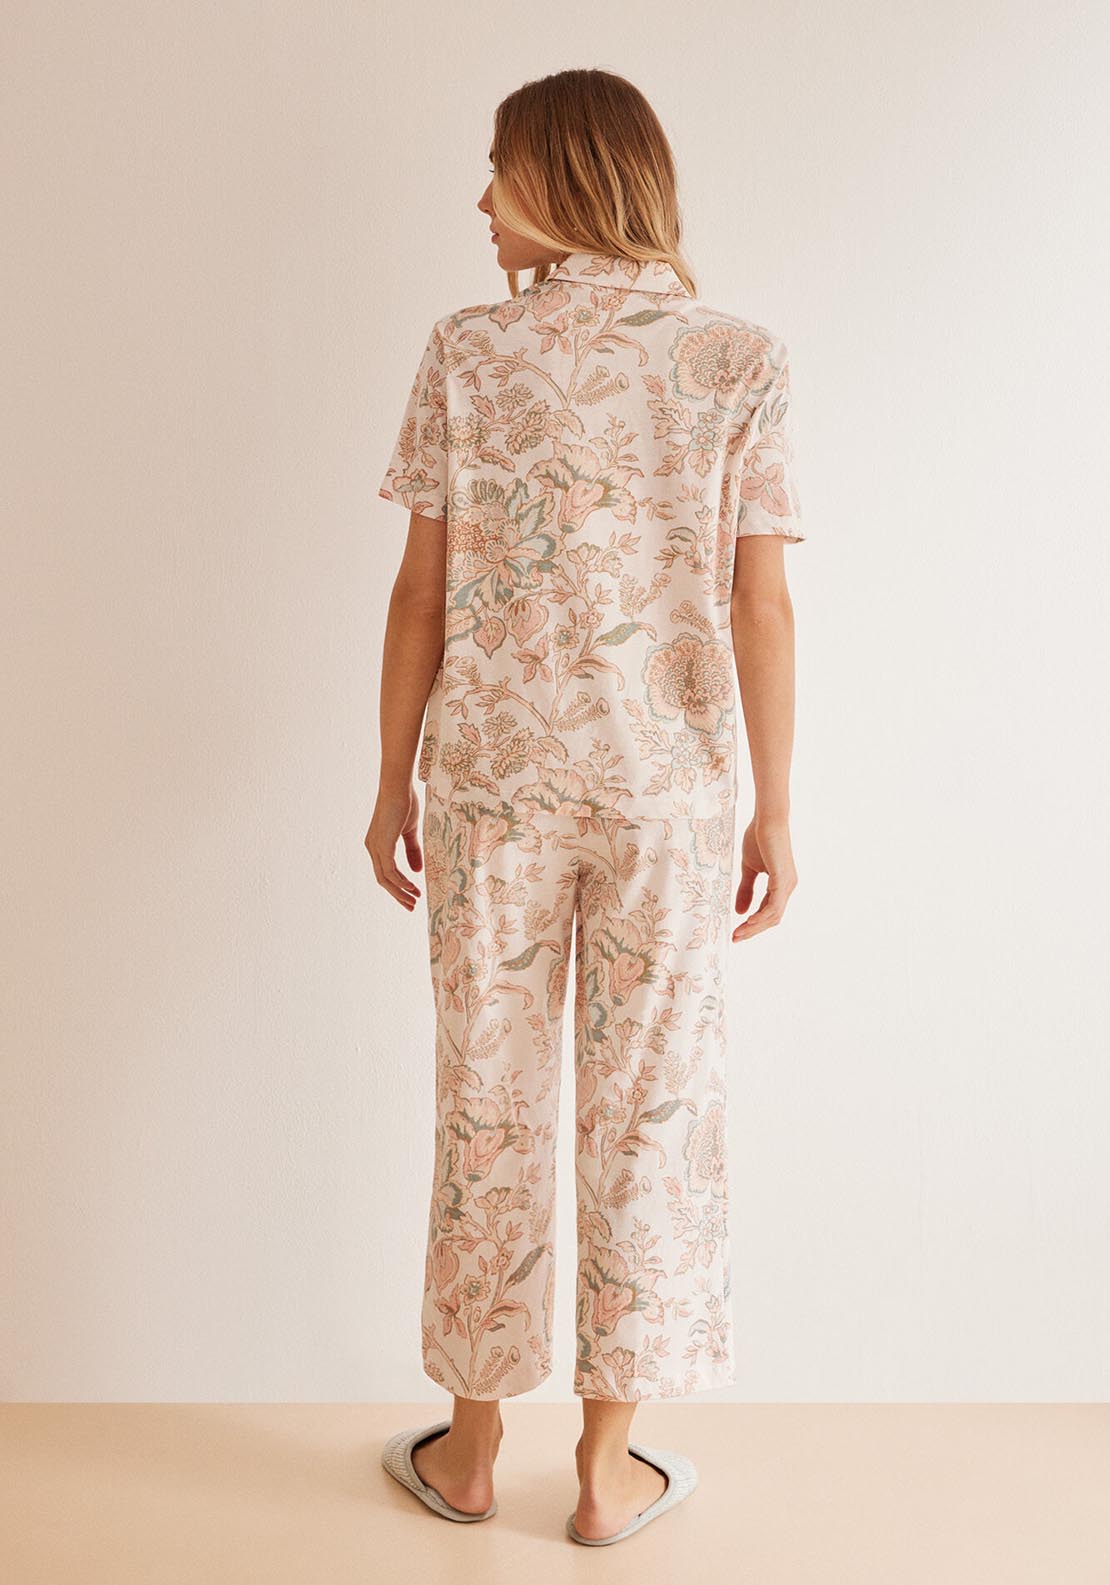 Womens Secret Classic floral print pyjamas in 100% cotton - White 2 Shaws Department Stores